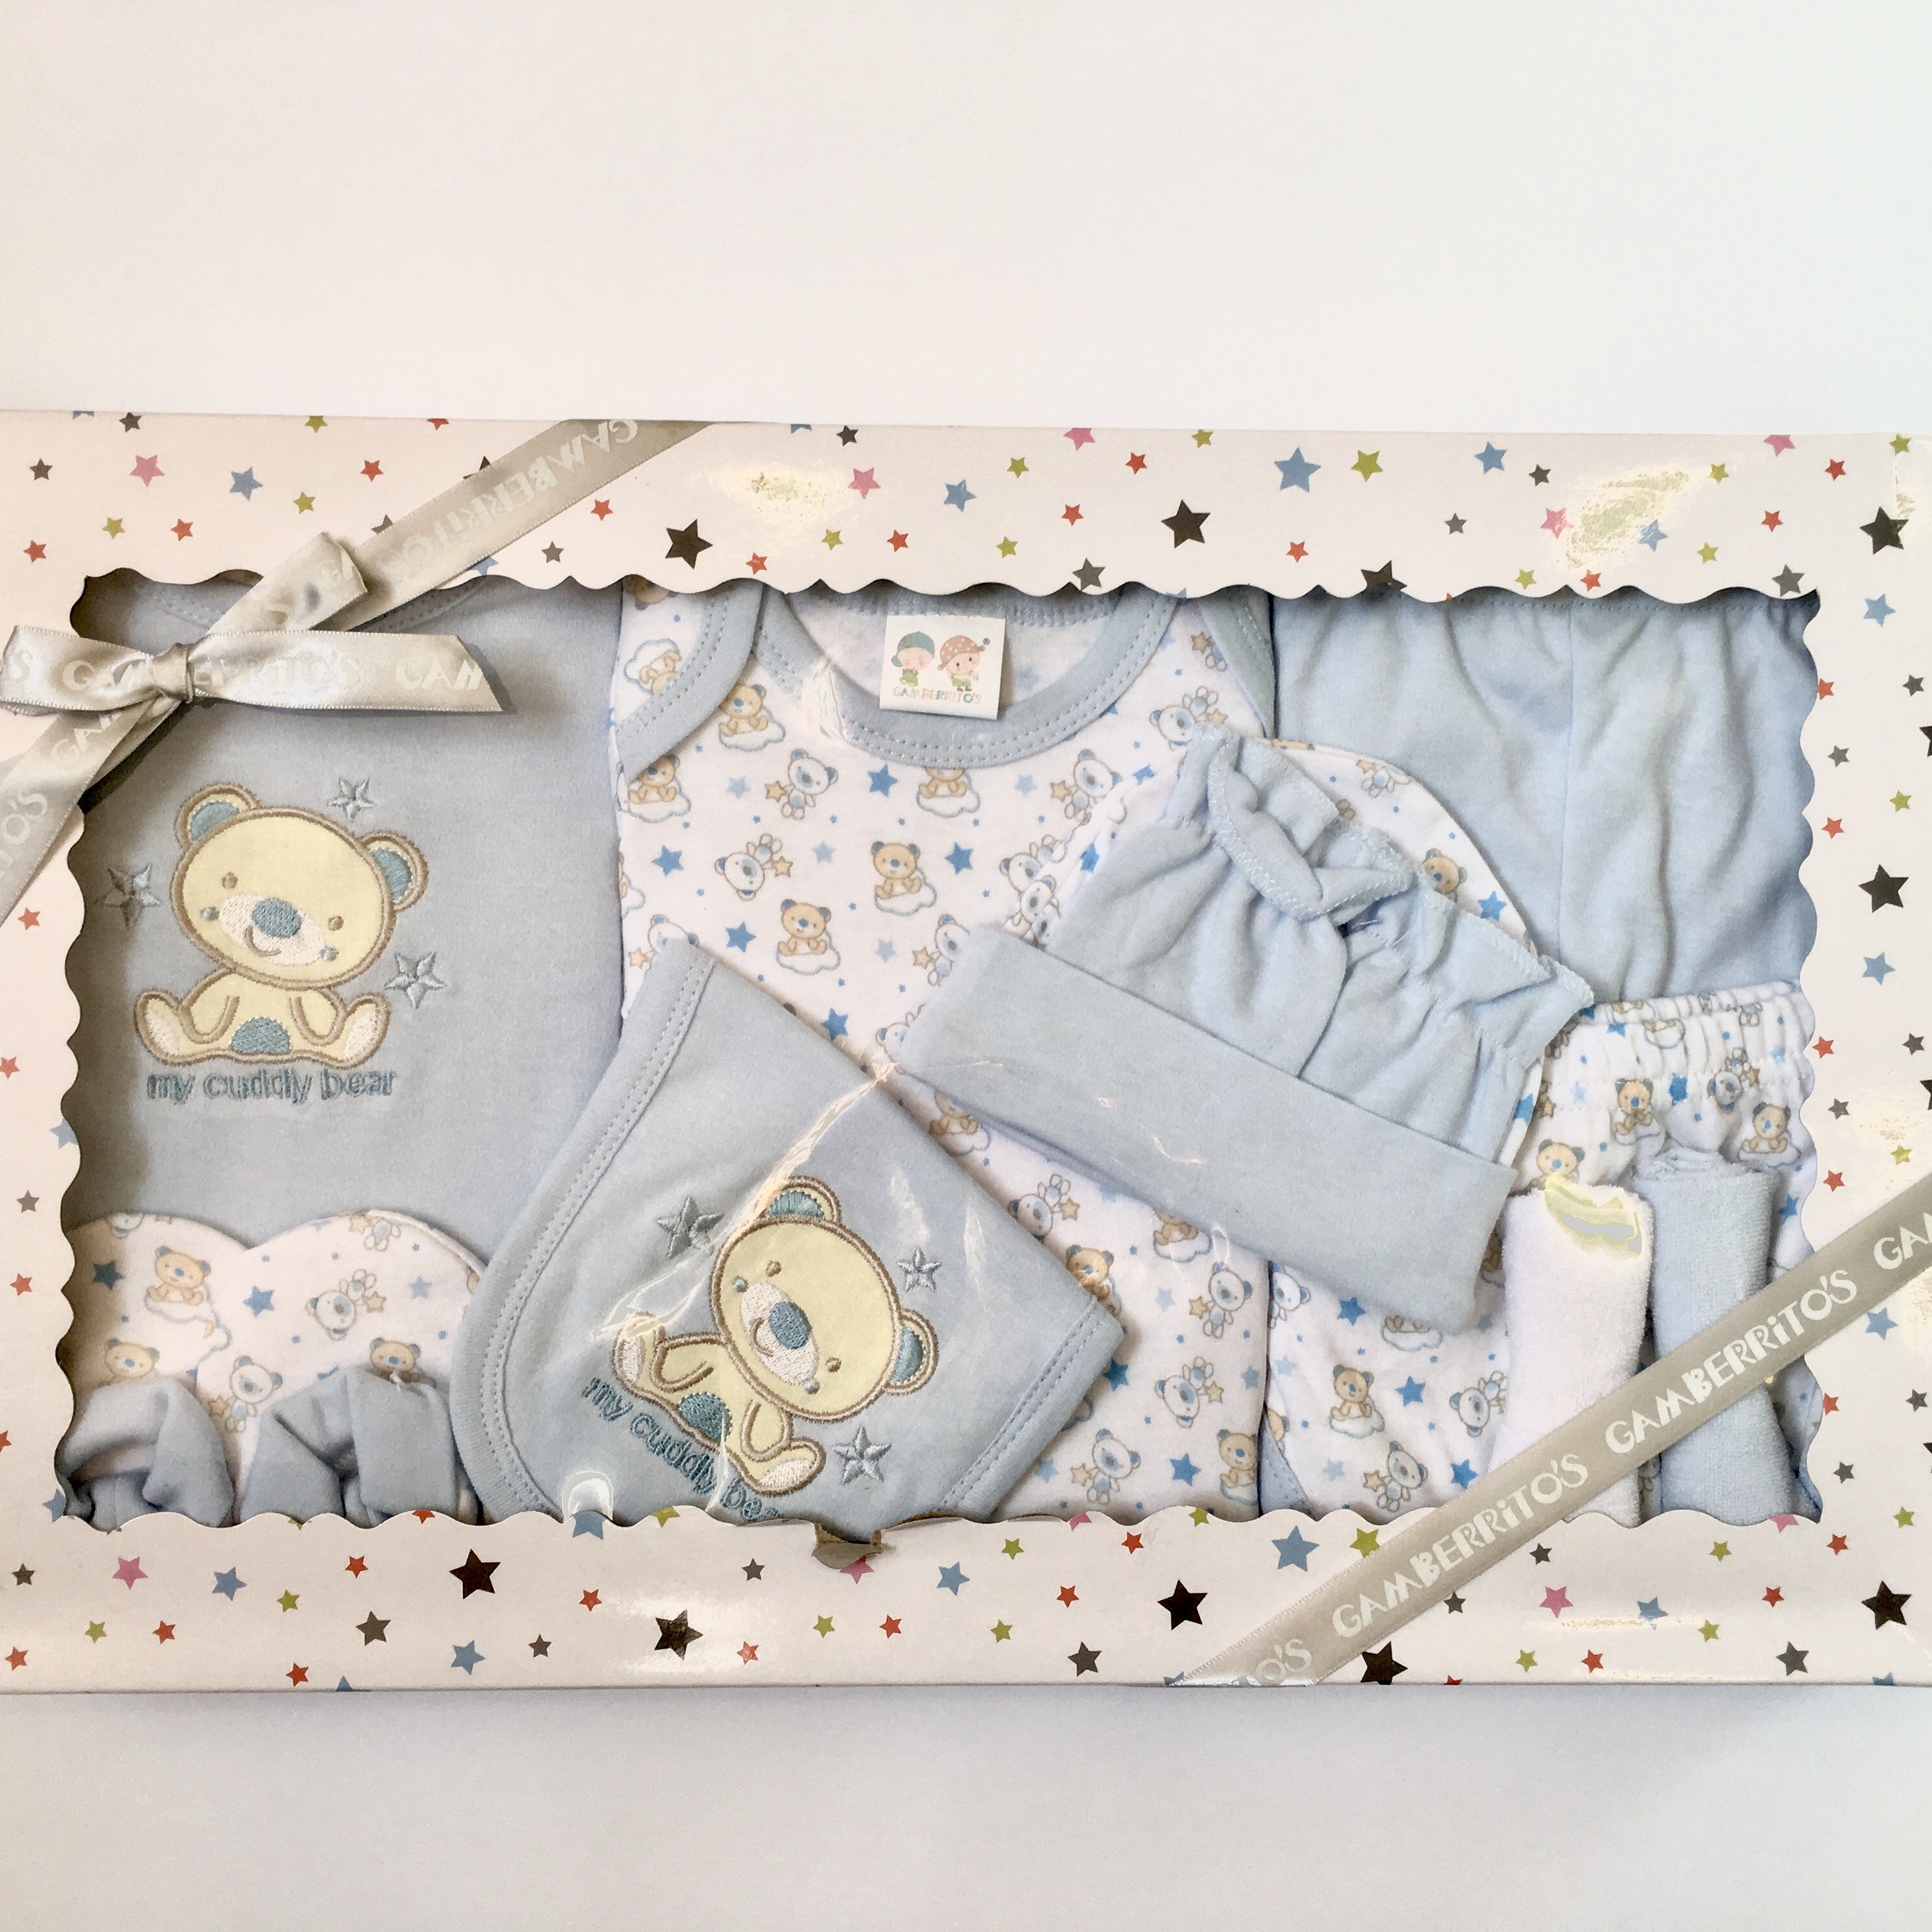 Набор новорожденному мальчику. Комплект для новорожденных 6 пр. арт.p6-km003-tr. Подарочный комплект для новорожденного. Подарочные комплекты для новорожденных. Подарочный набор для младенца.